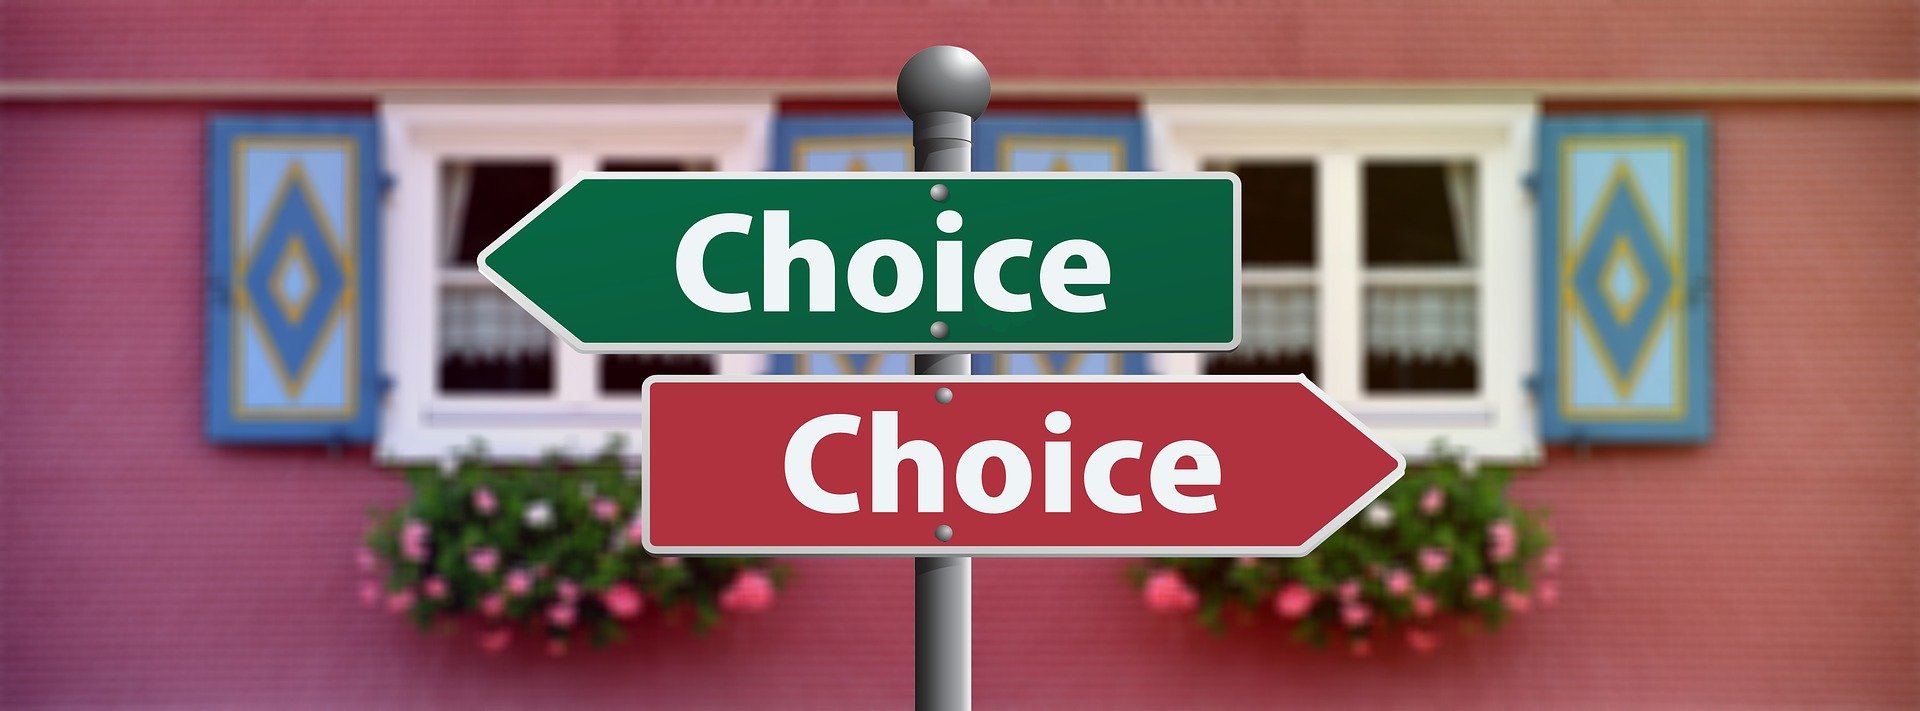 Choice(選択)という表記の看板